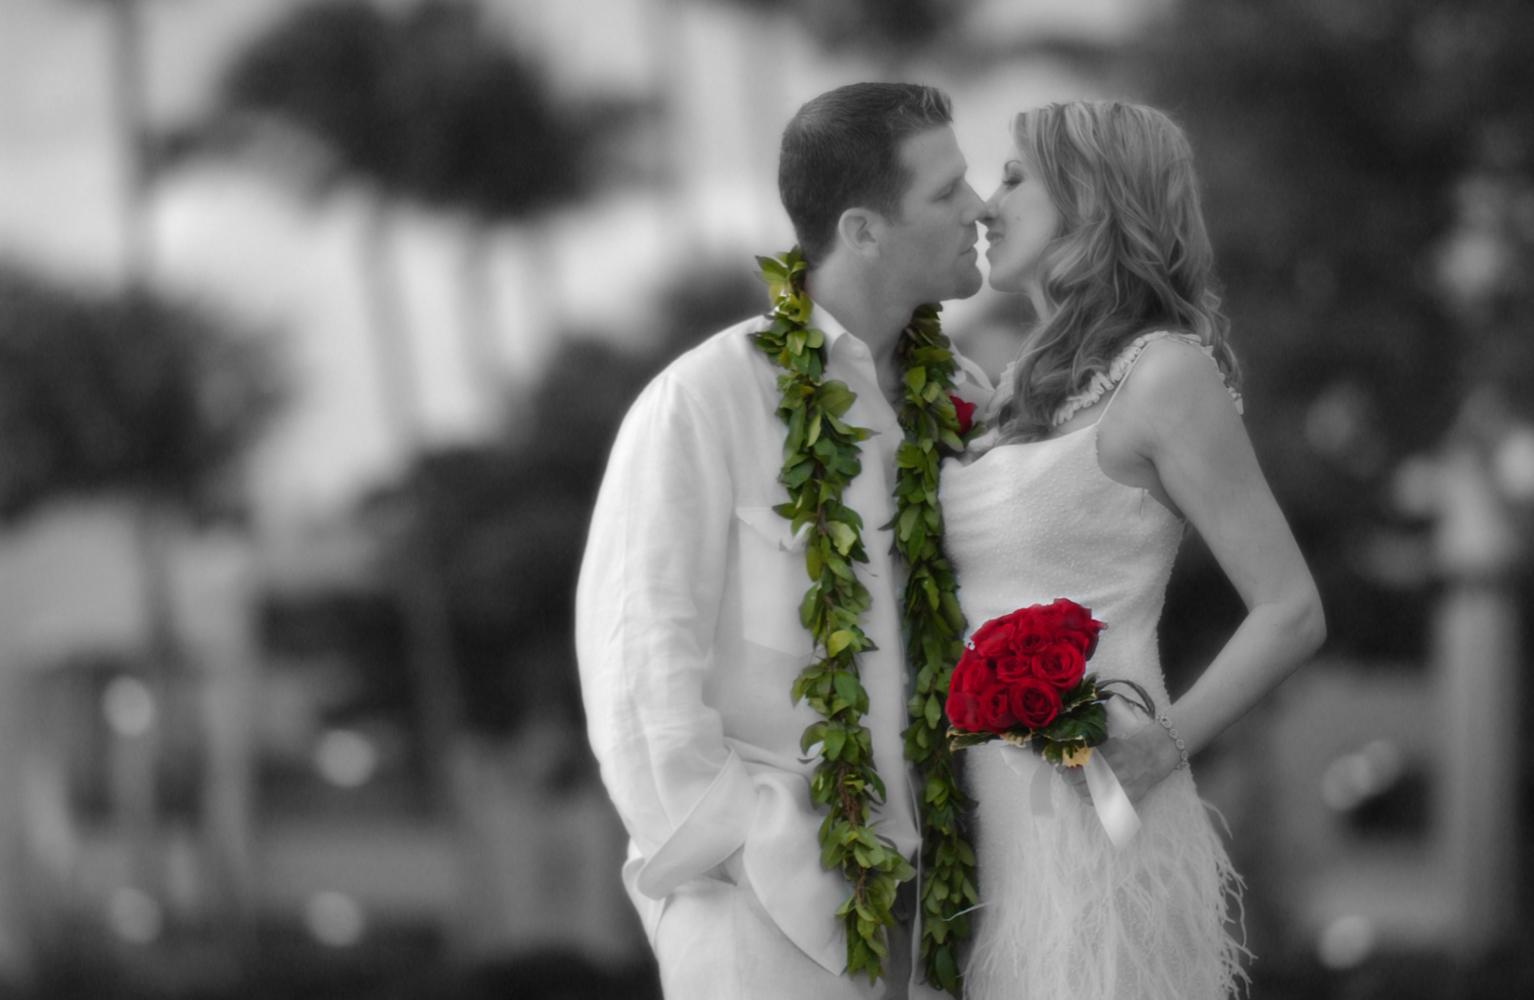 Maui Hawaii Beach Wedding Photographer, マウイカメラマン、写真家、Maui Photography, Grand Wailea